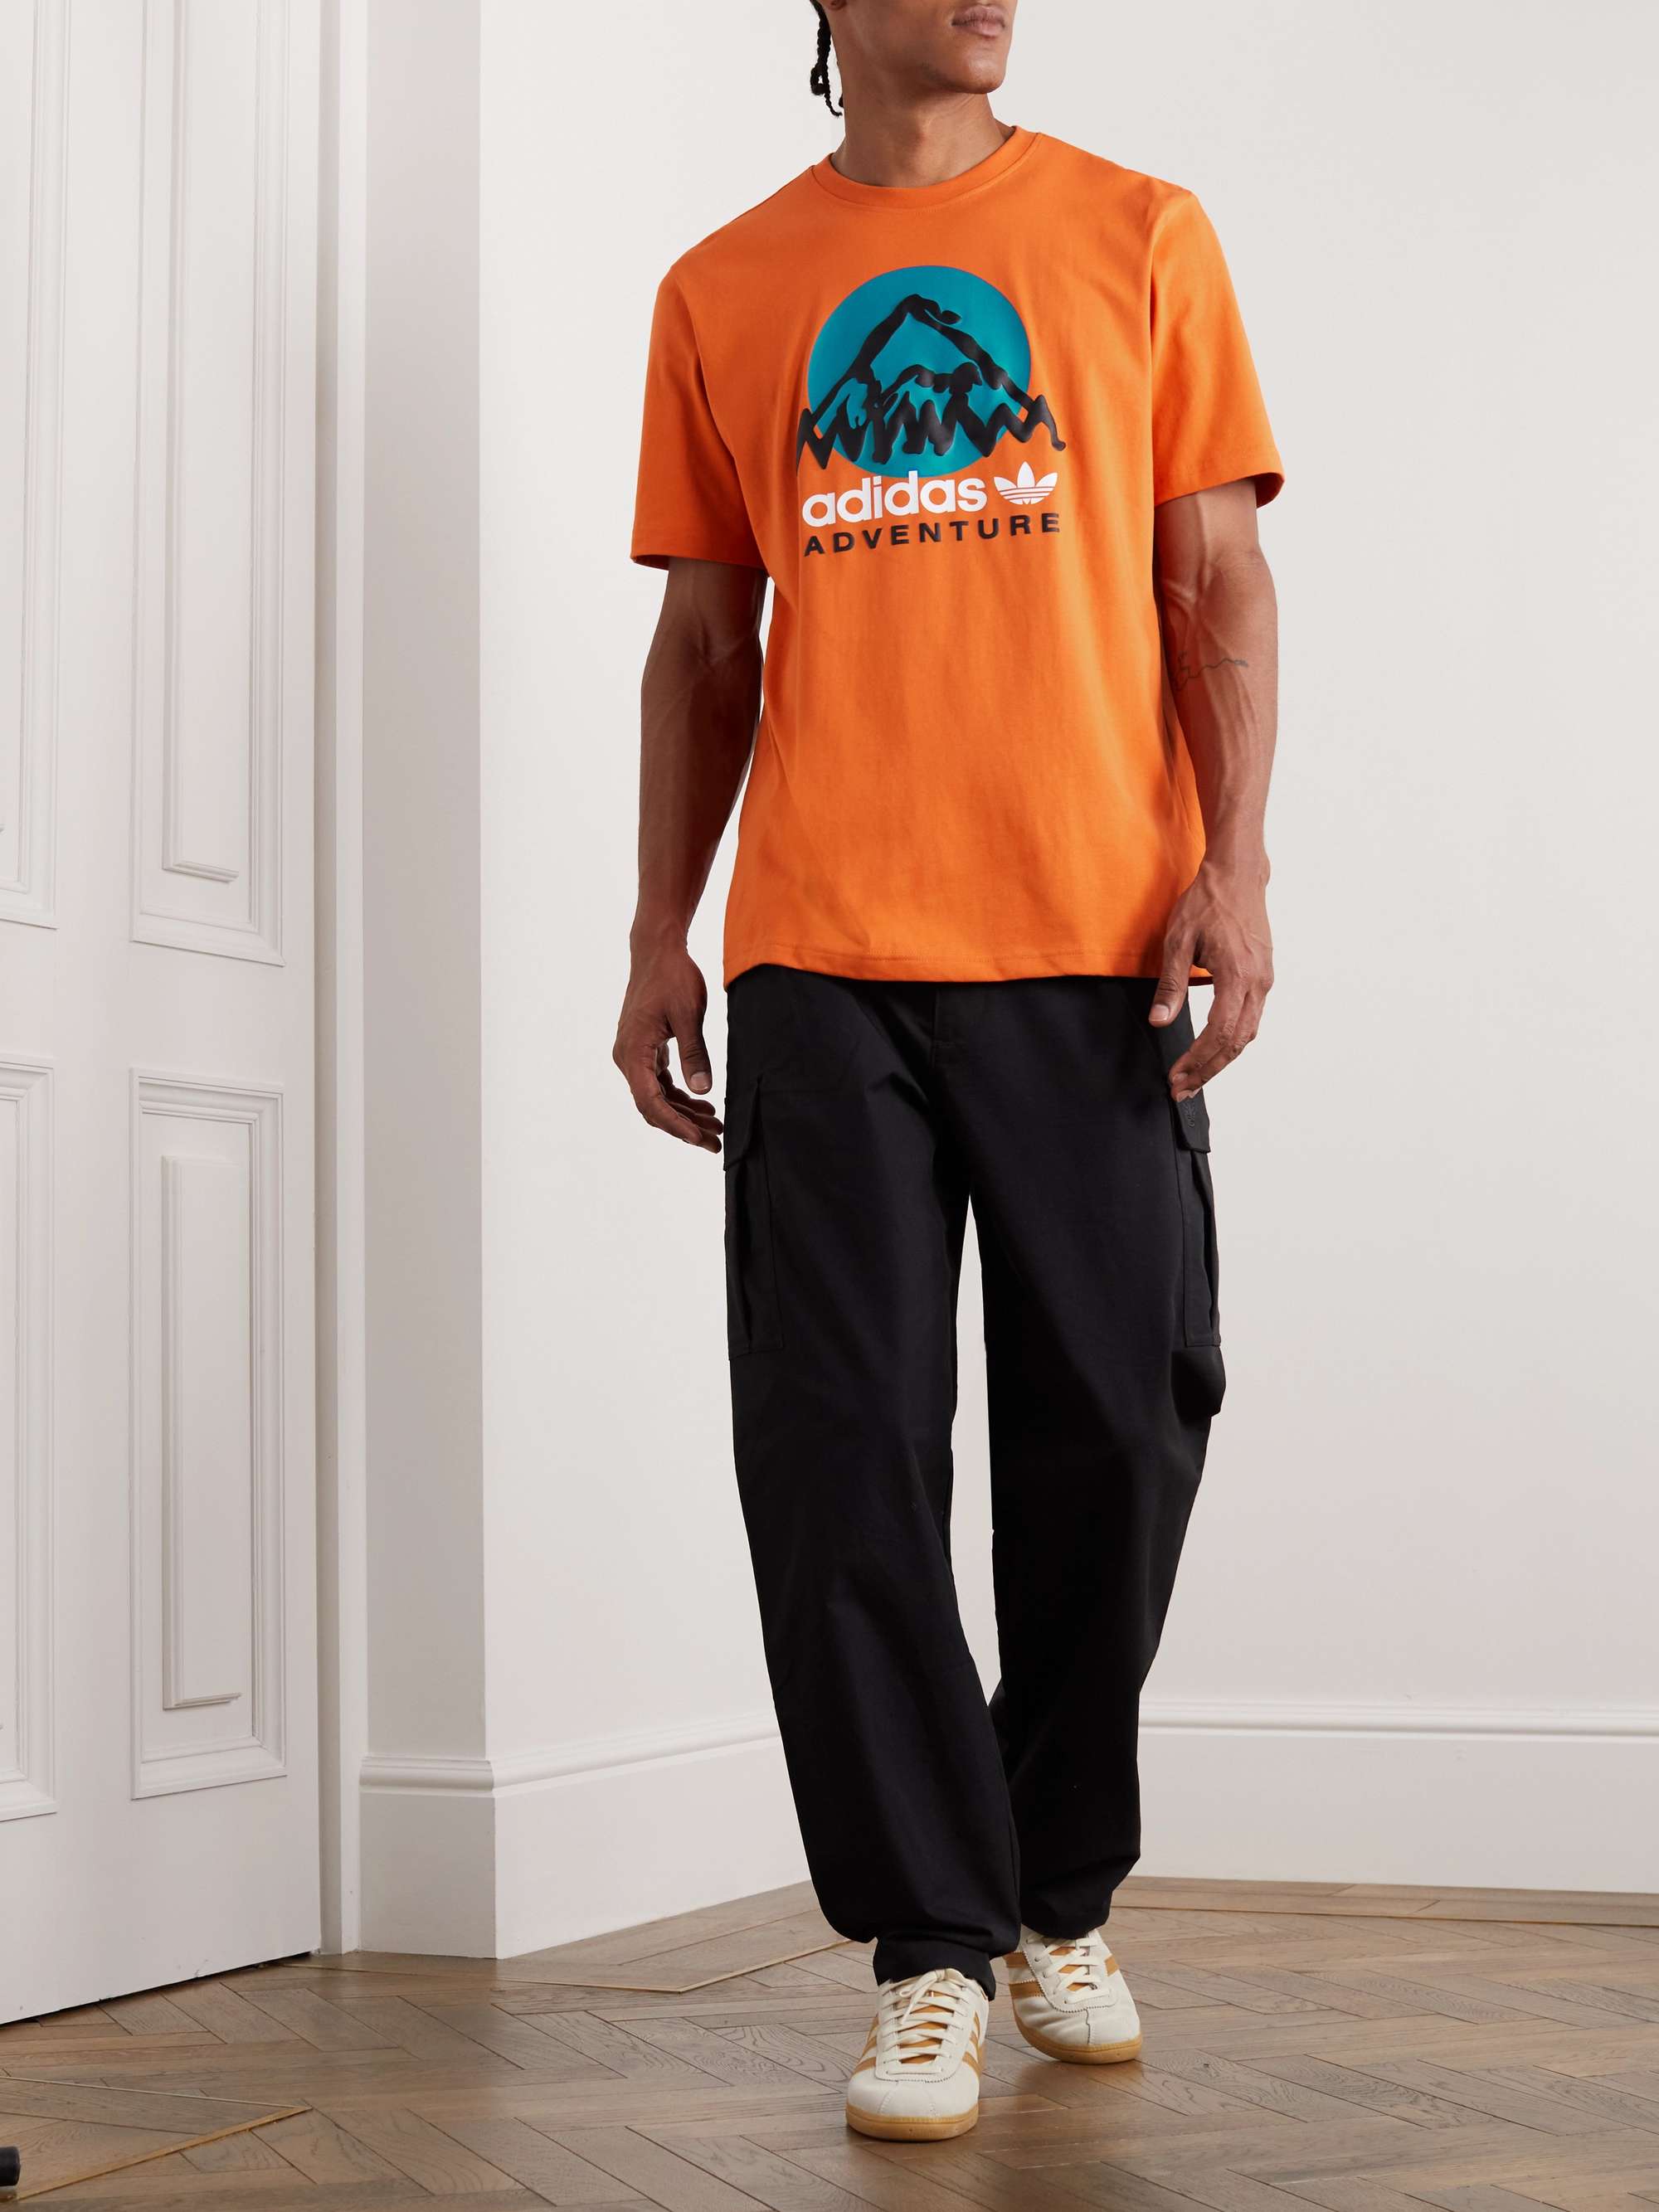 ADIDAS ORIGINALS Adventure Logo-Print Cotton-Jersey T-Shirt | MR PORTER